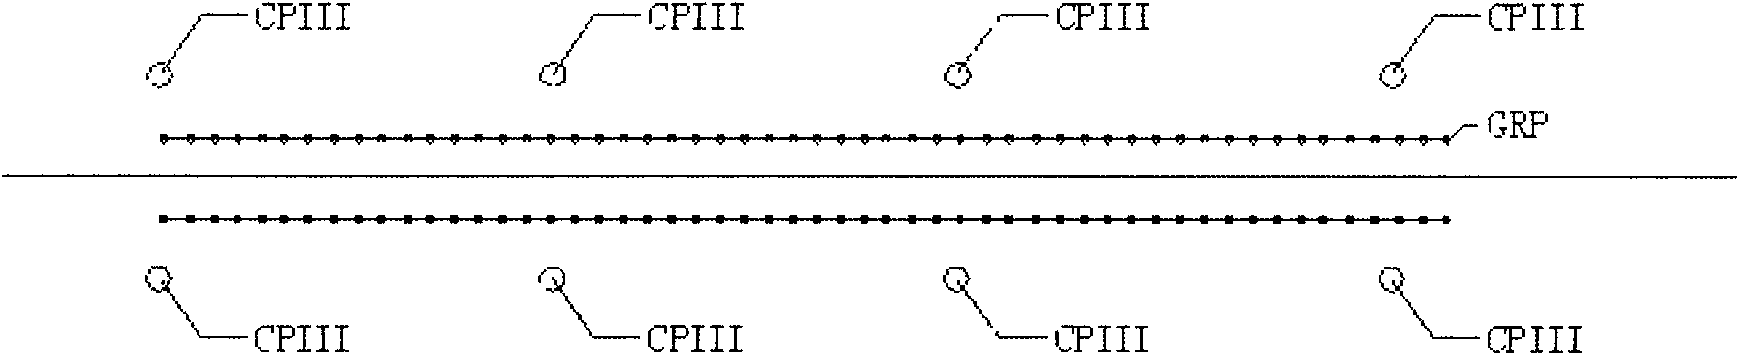 Fine-tuning construction method for CRTS I (China railway track system) type slab ballastless track